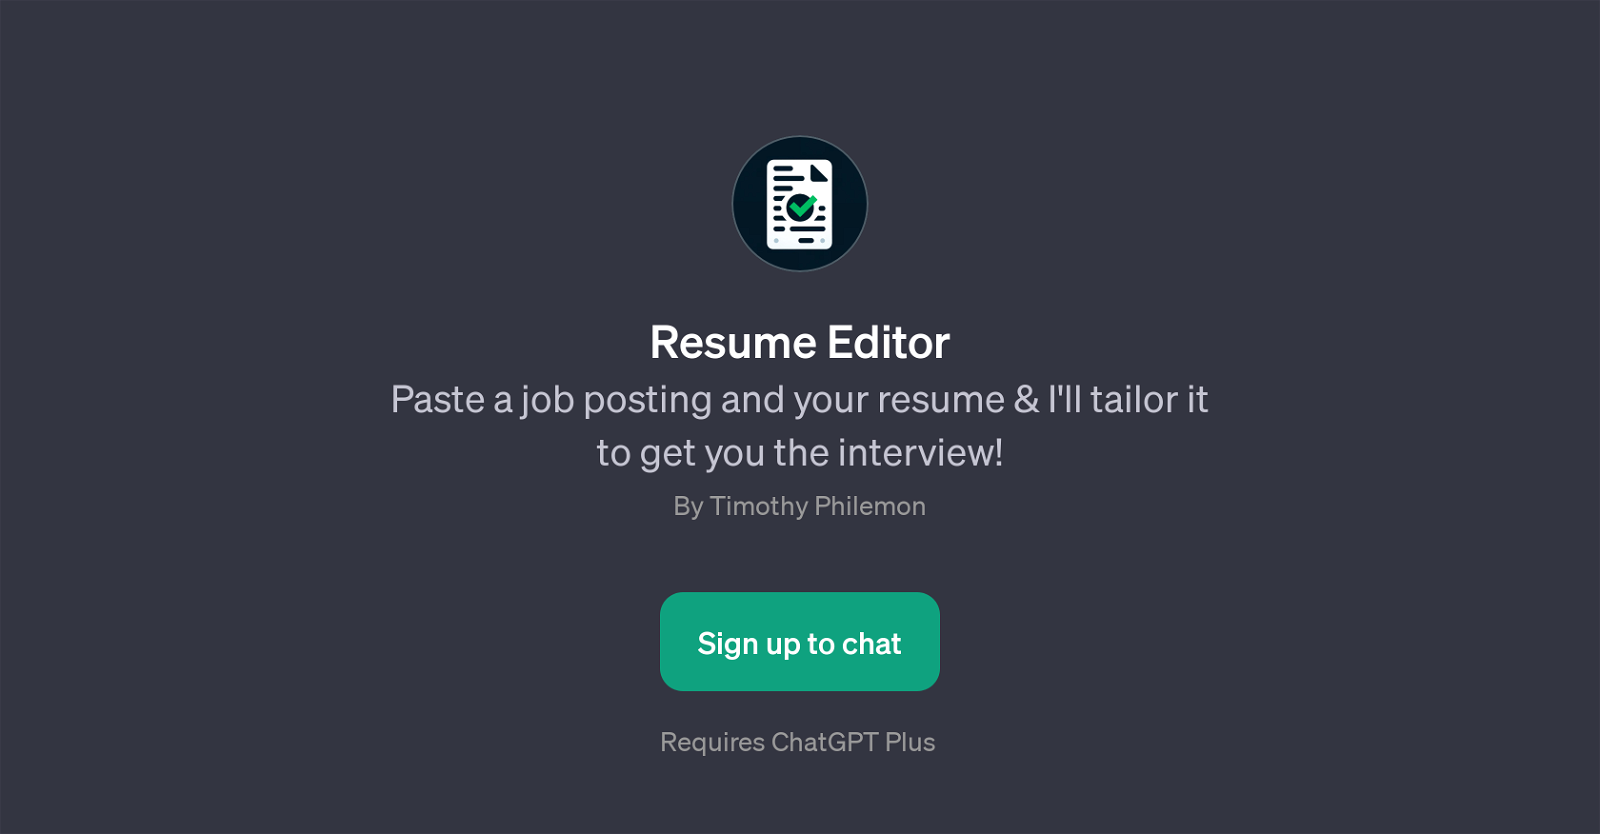 Resume Editor website